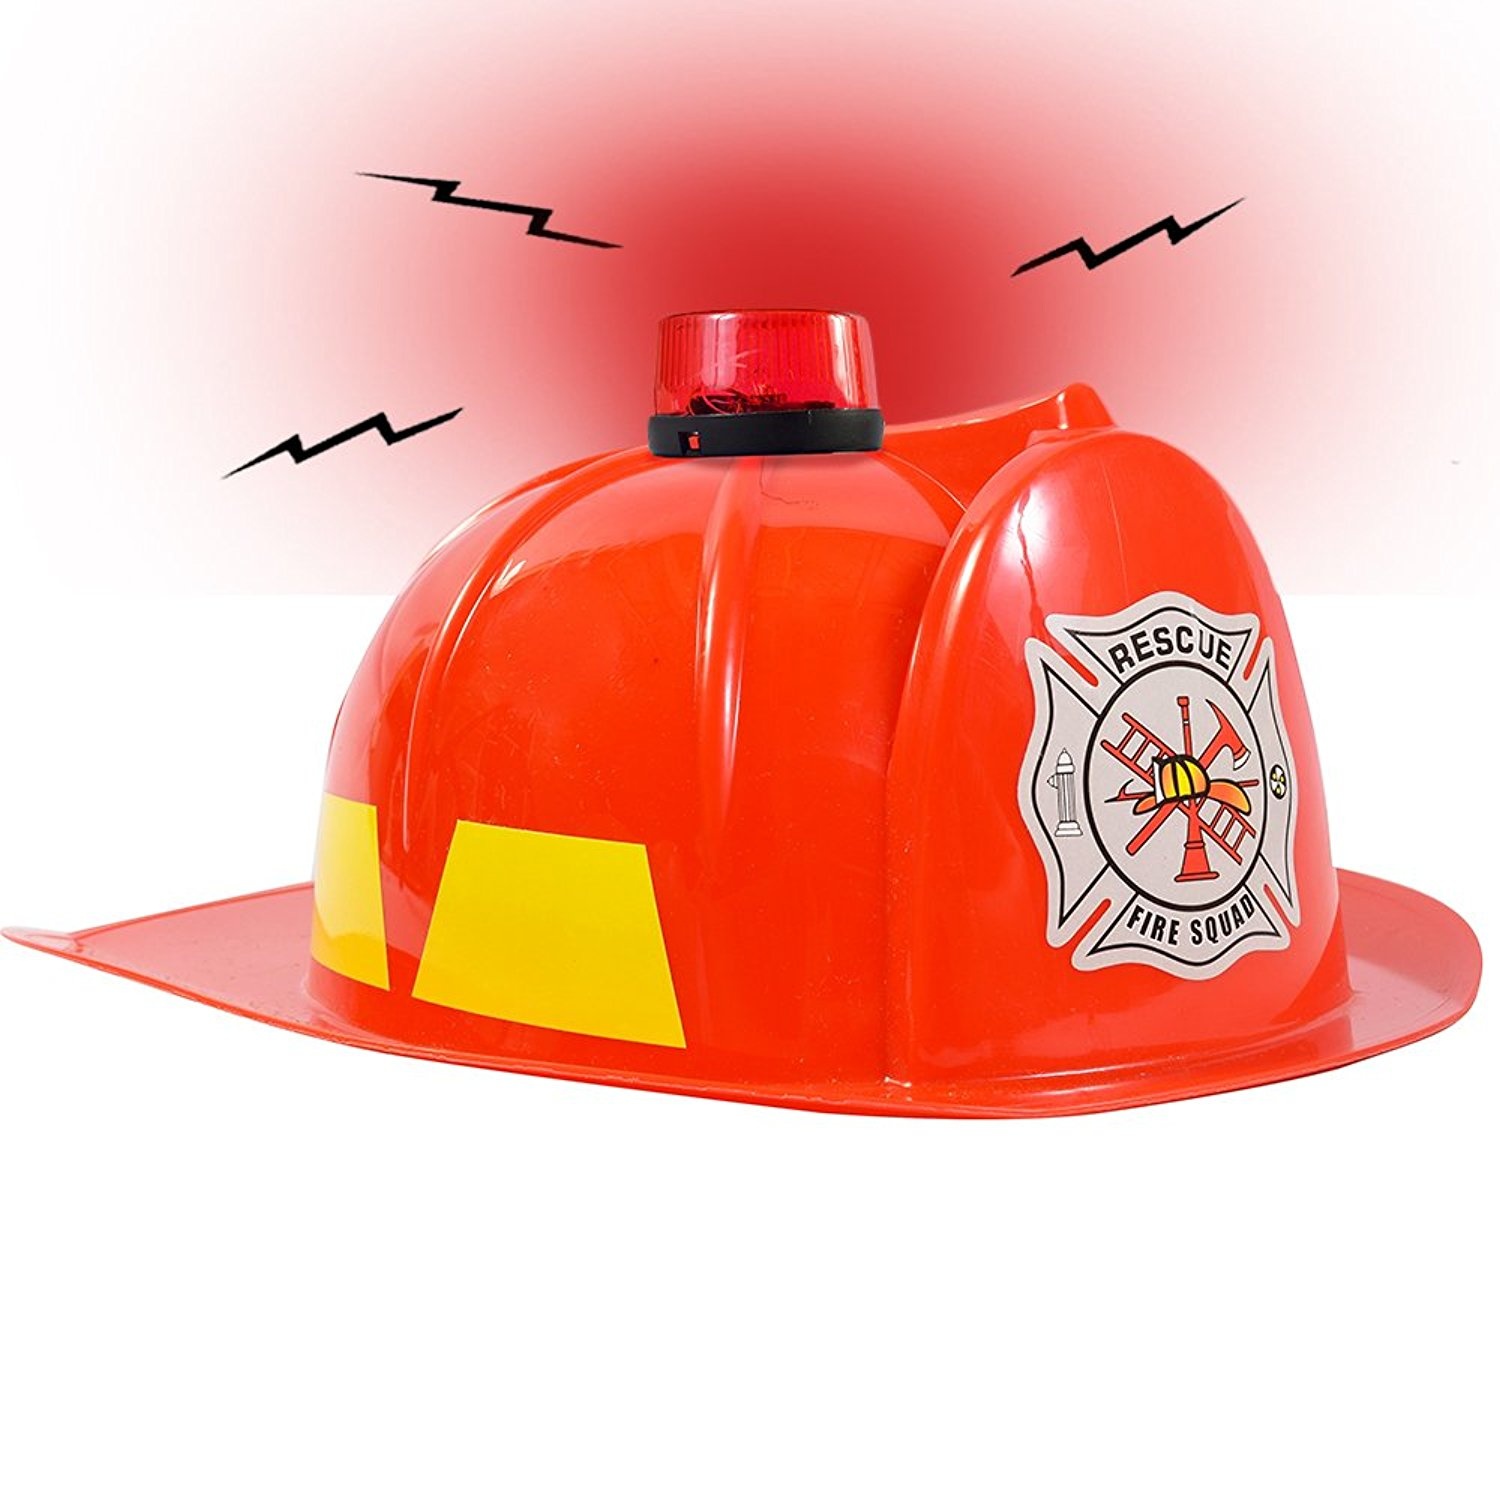 Fireman Hats For Kids Toys: Buy Online from Fishpond.com.au